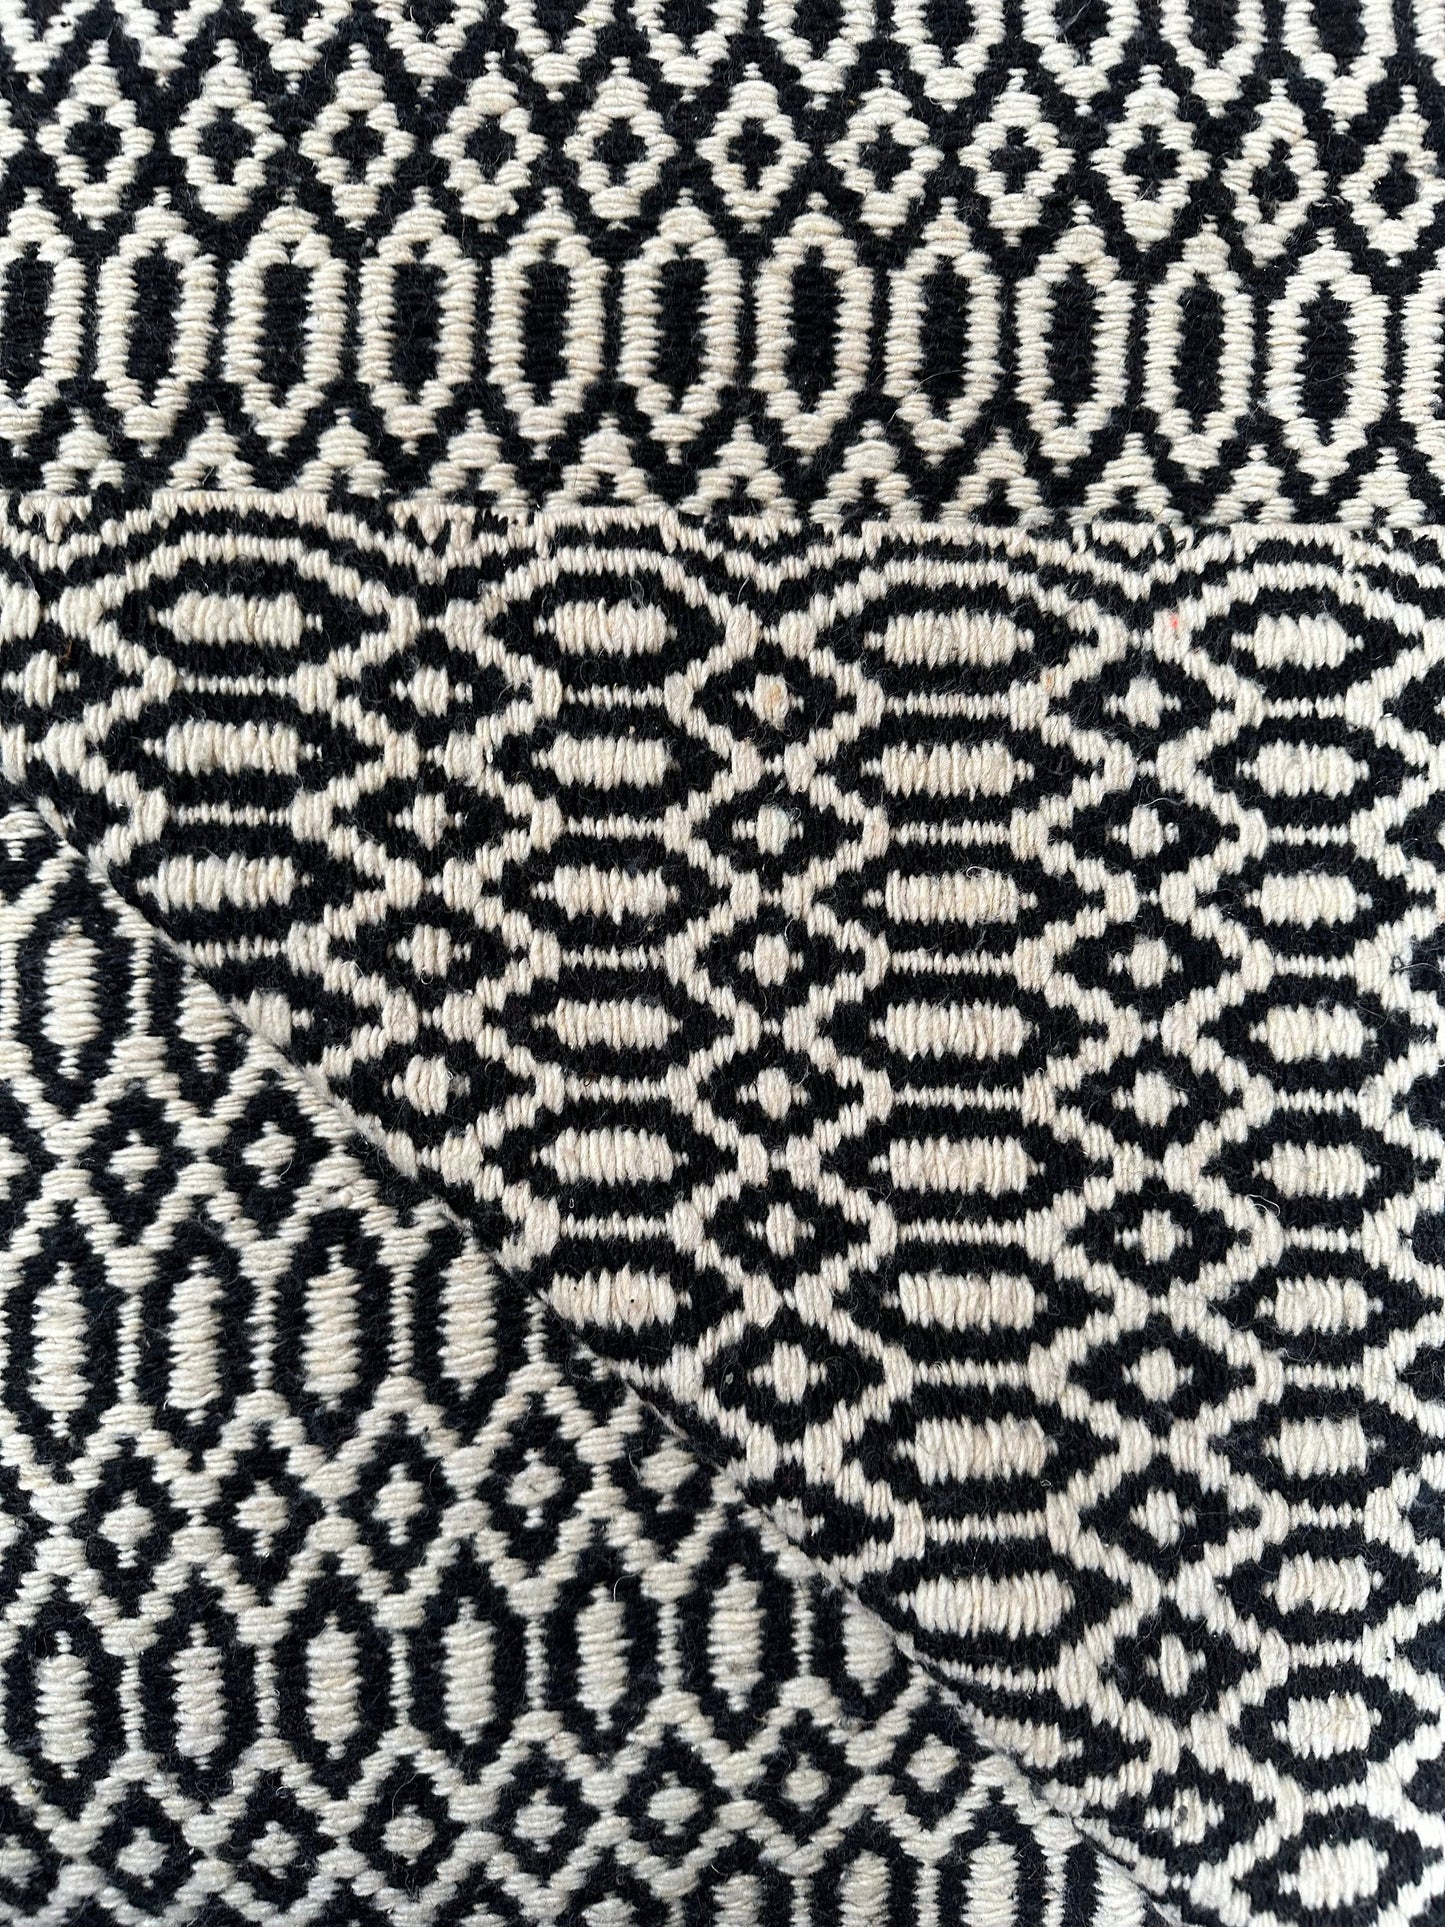 Vintage Handwoven Beige and Black Graphic Blanket